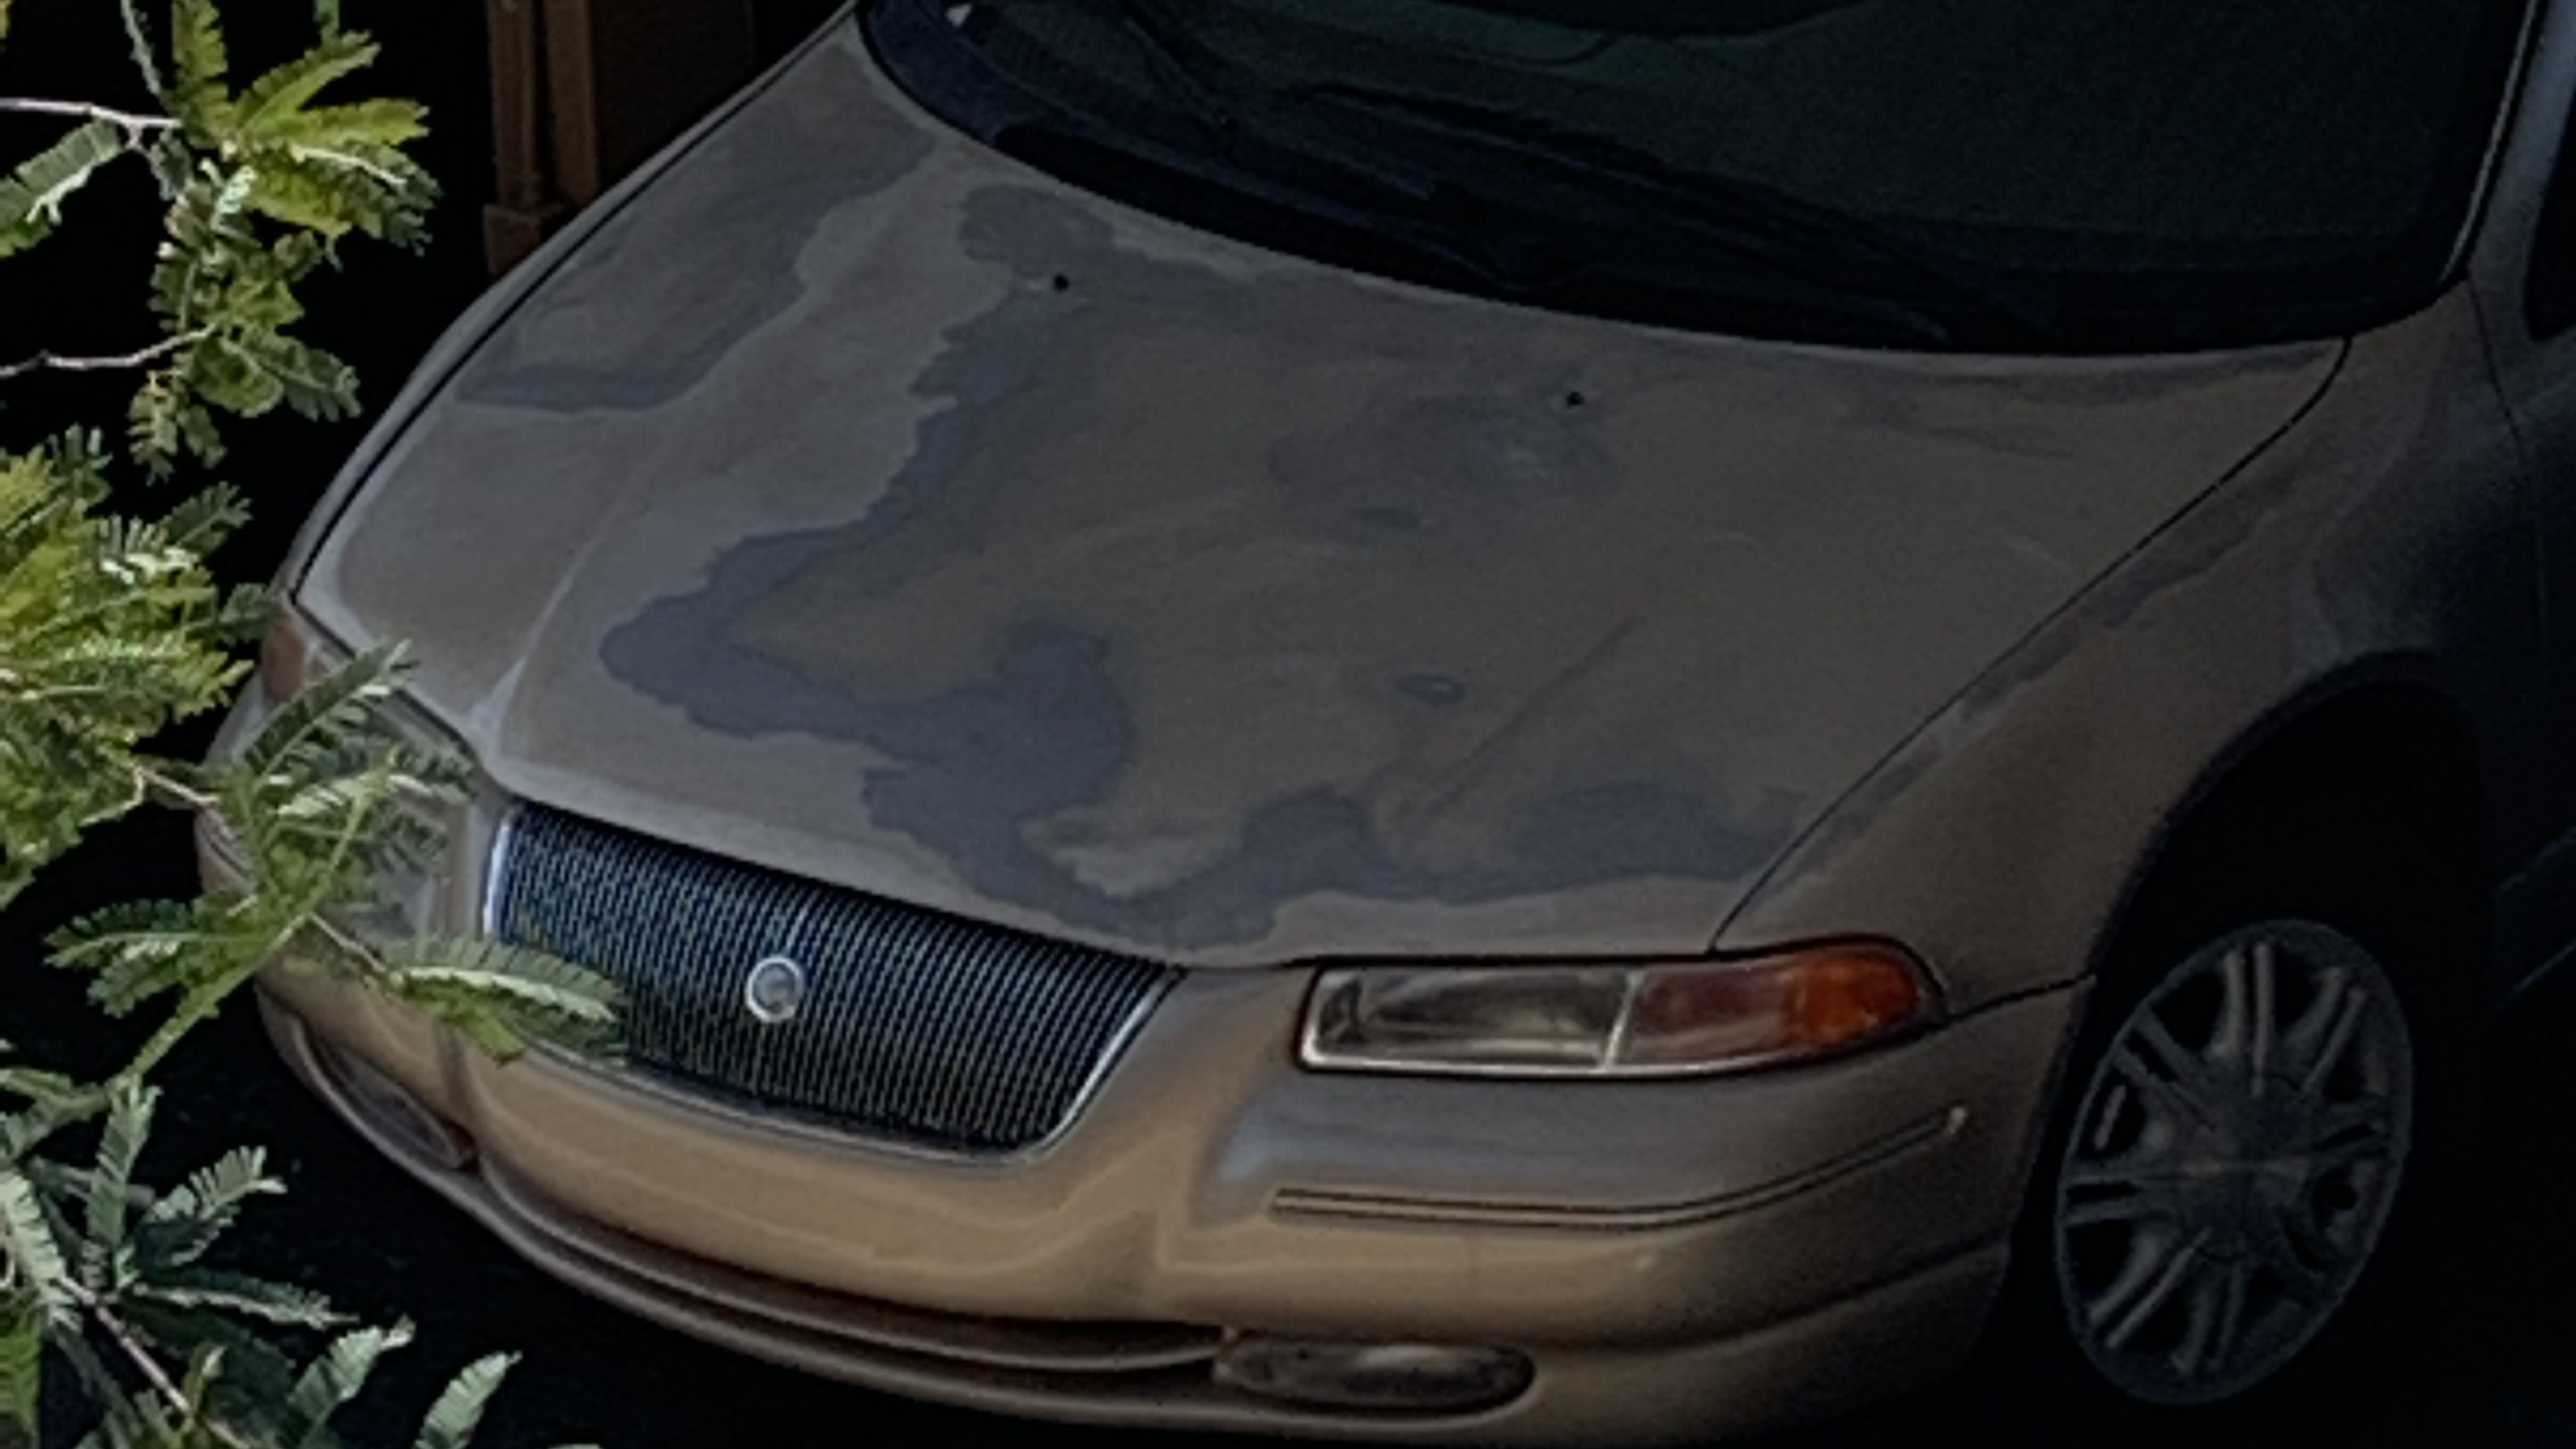 Sun damaged Chrysler Cirrus